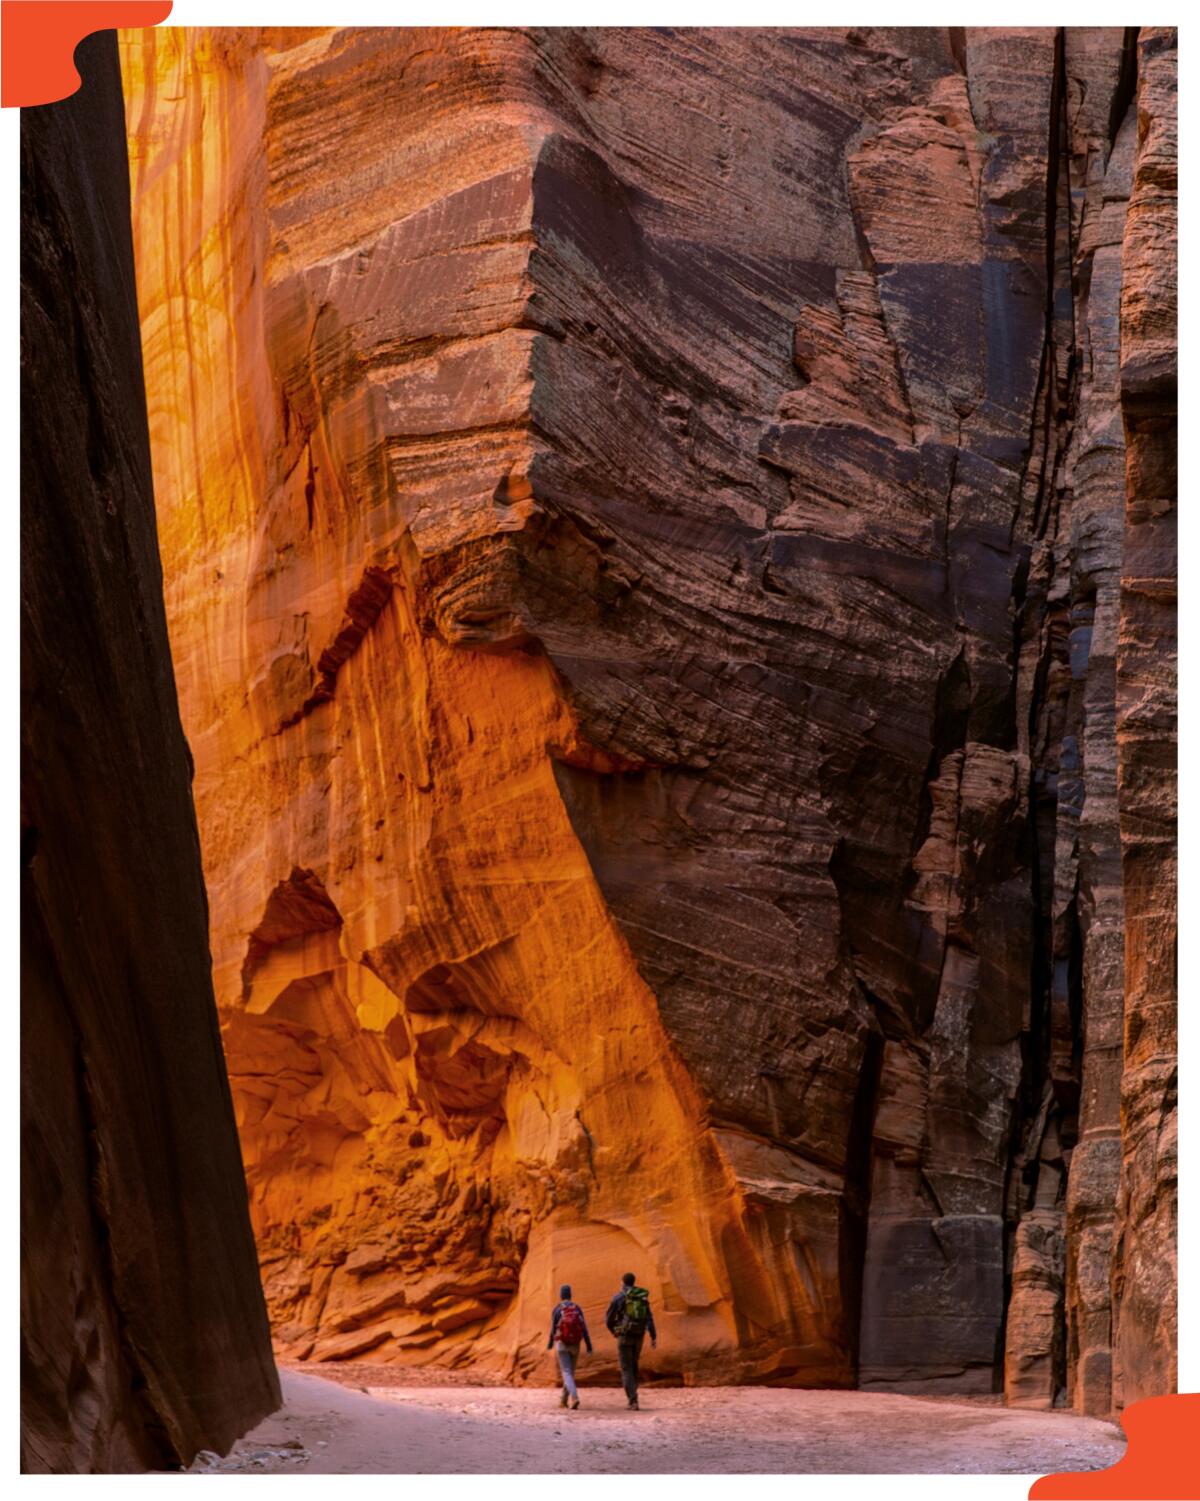 Hikers walk along a sandy trail flanked by the massive sandstone walls of Buckskin Gulch in Utah.